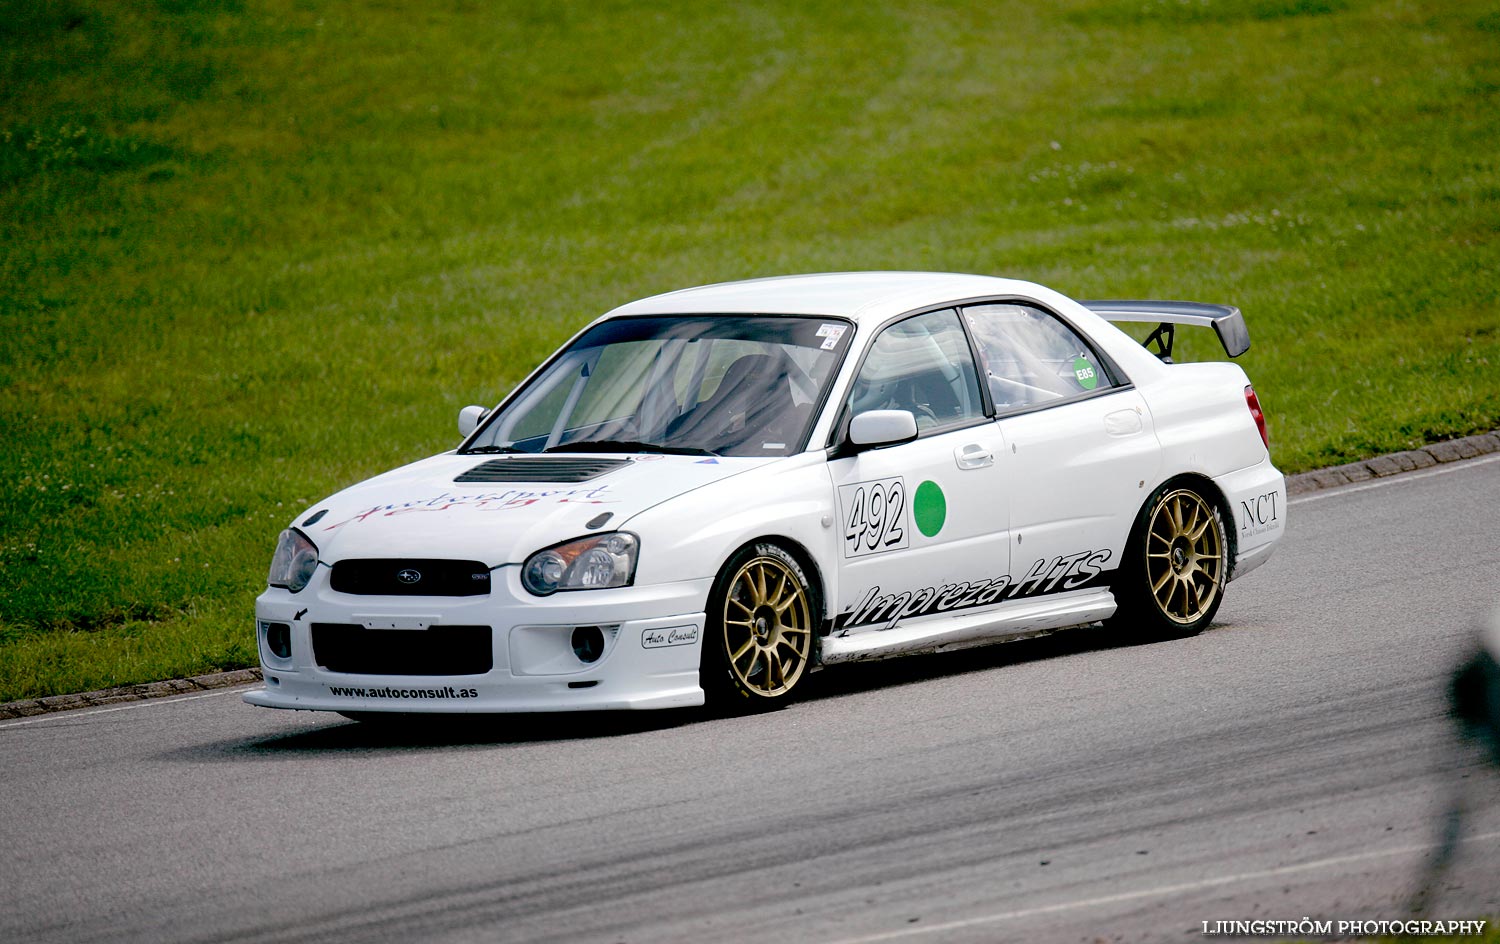 SSK Raceweek,mix,Kinnekulle Ring,Götene,Sverige,Motorsport,,2009,107503